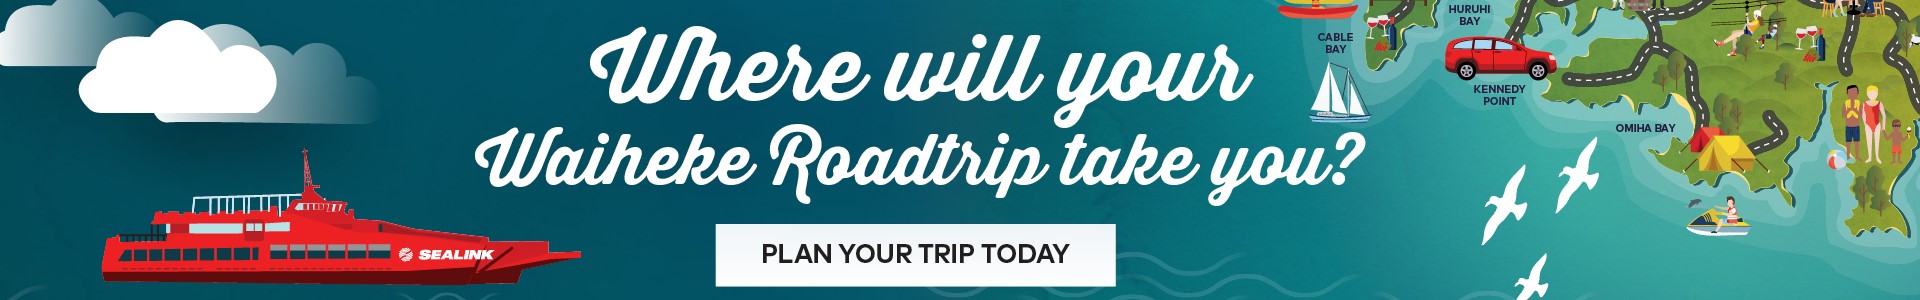 Your Waiheke Road Trip starts here - Road Trips Banner